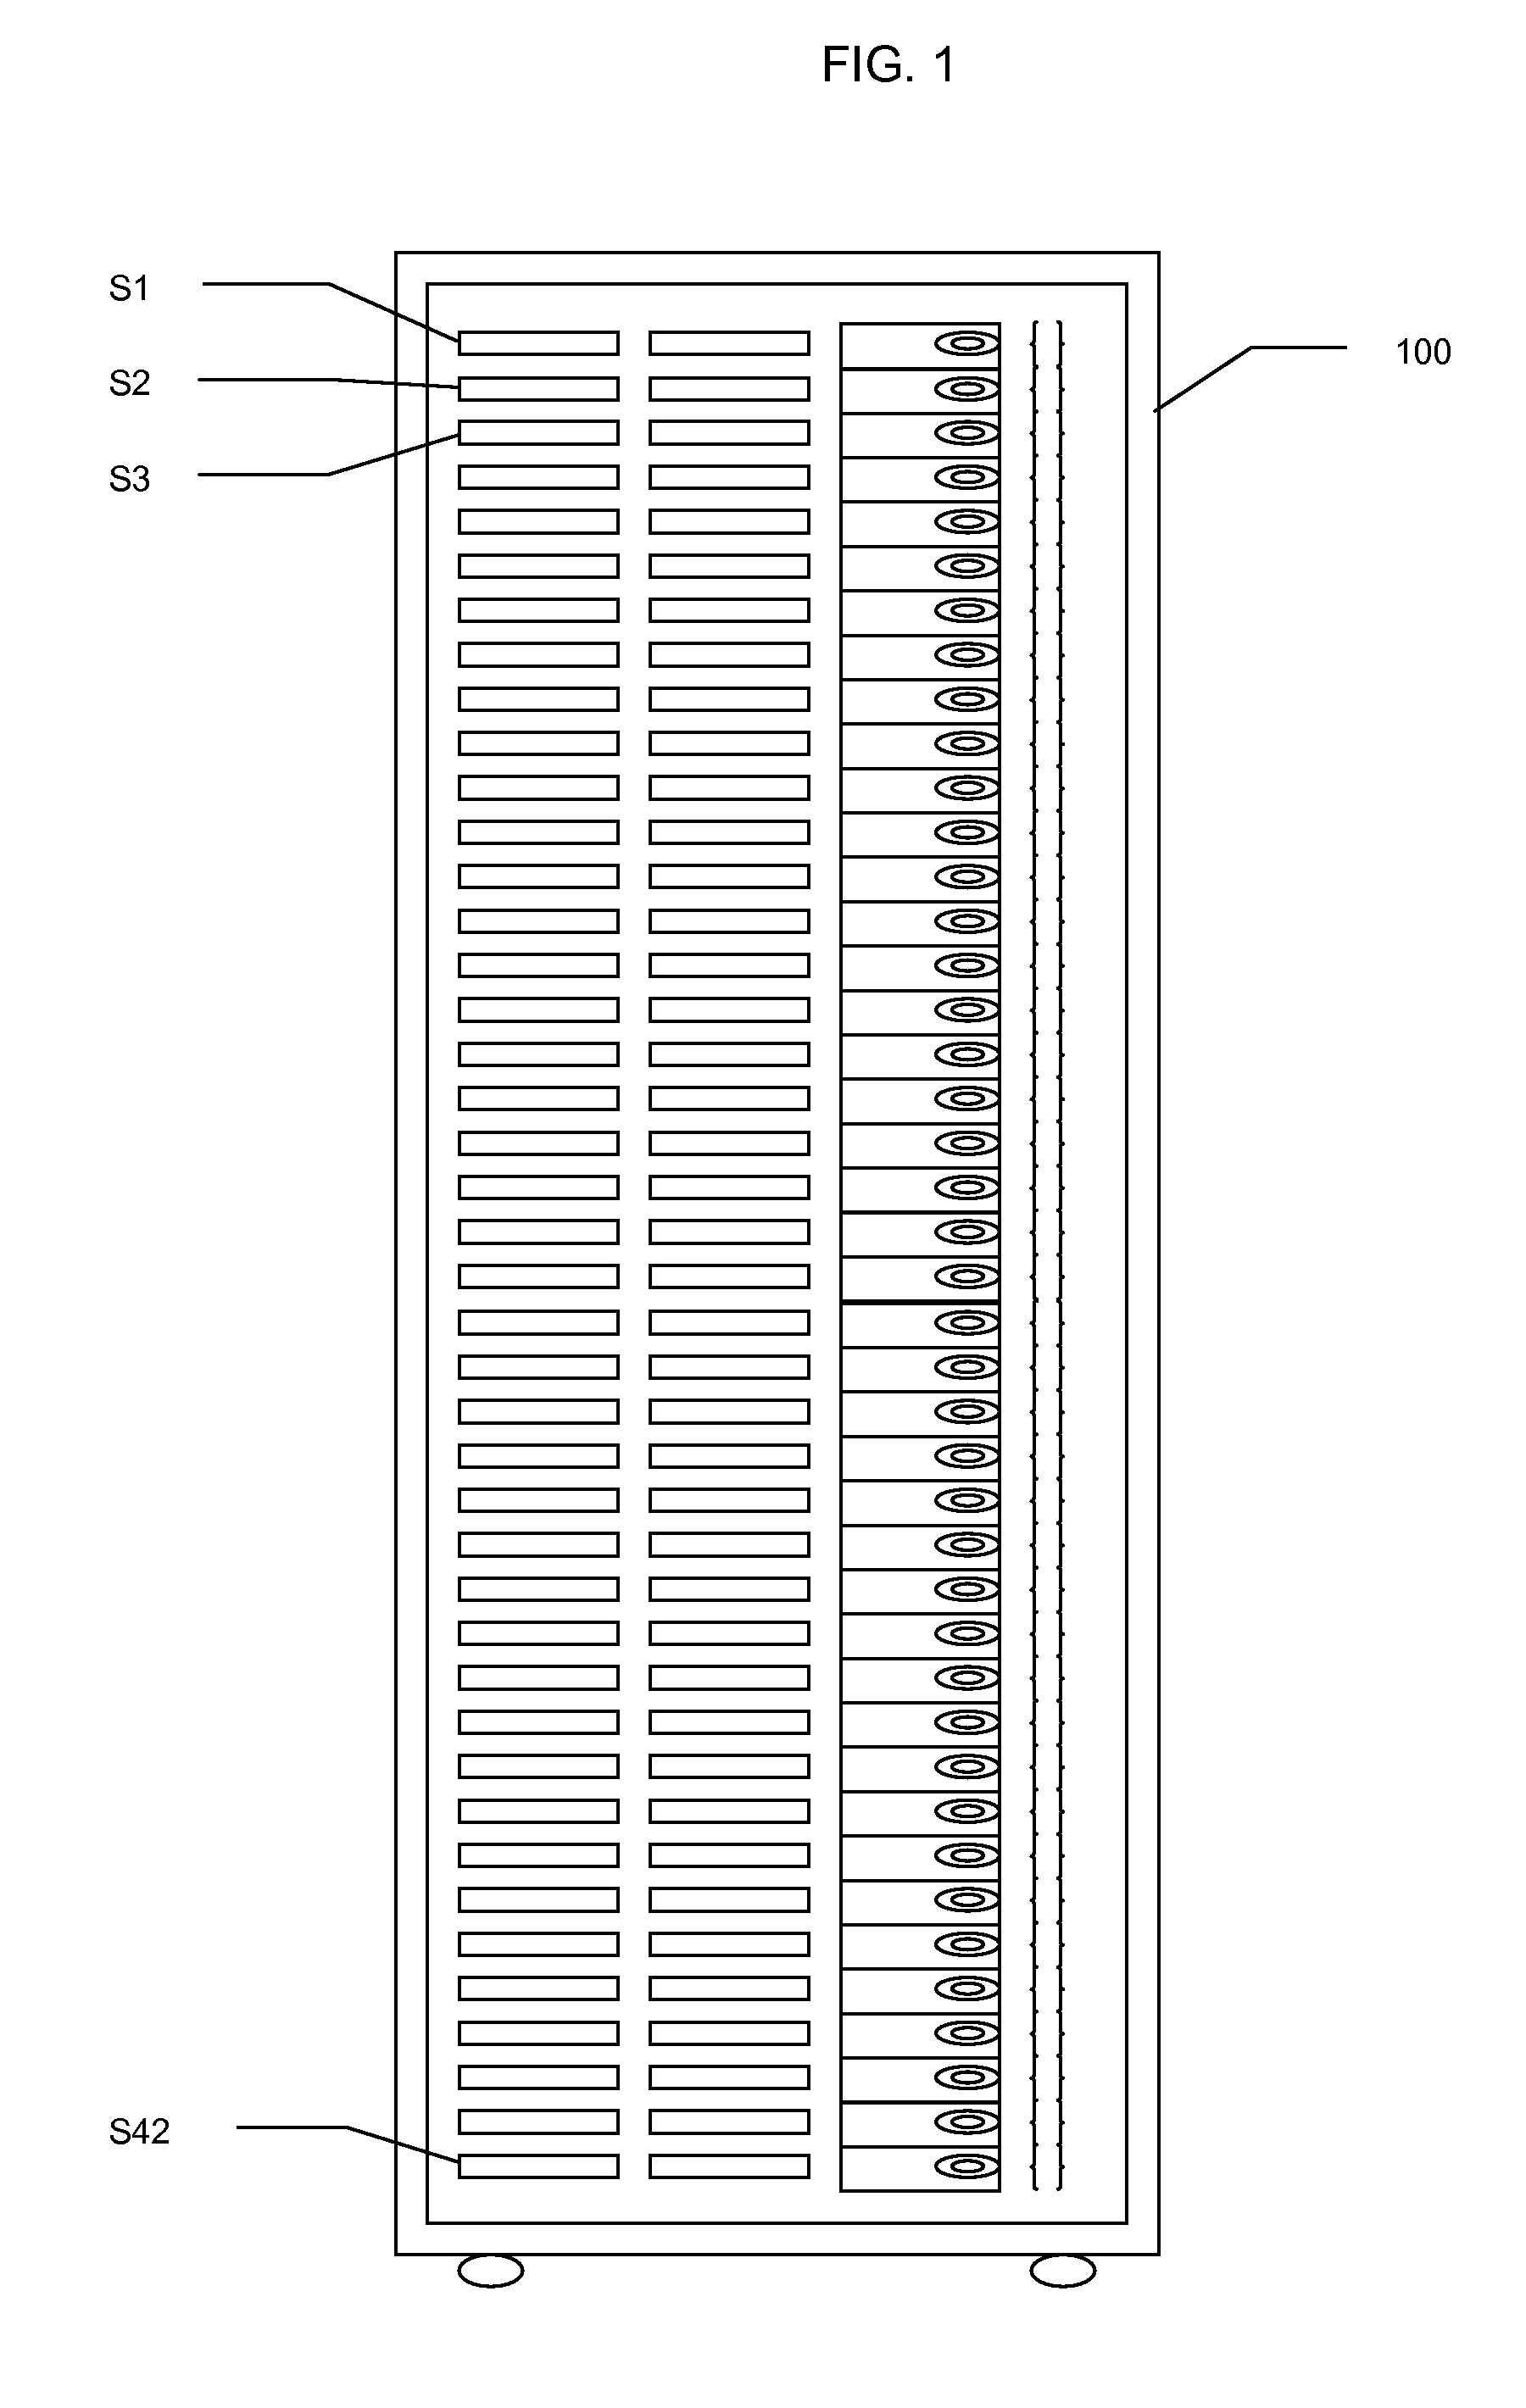 Centralized server rack management using USB